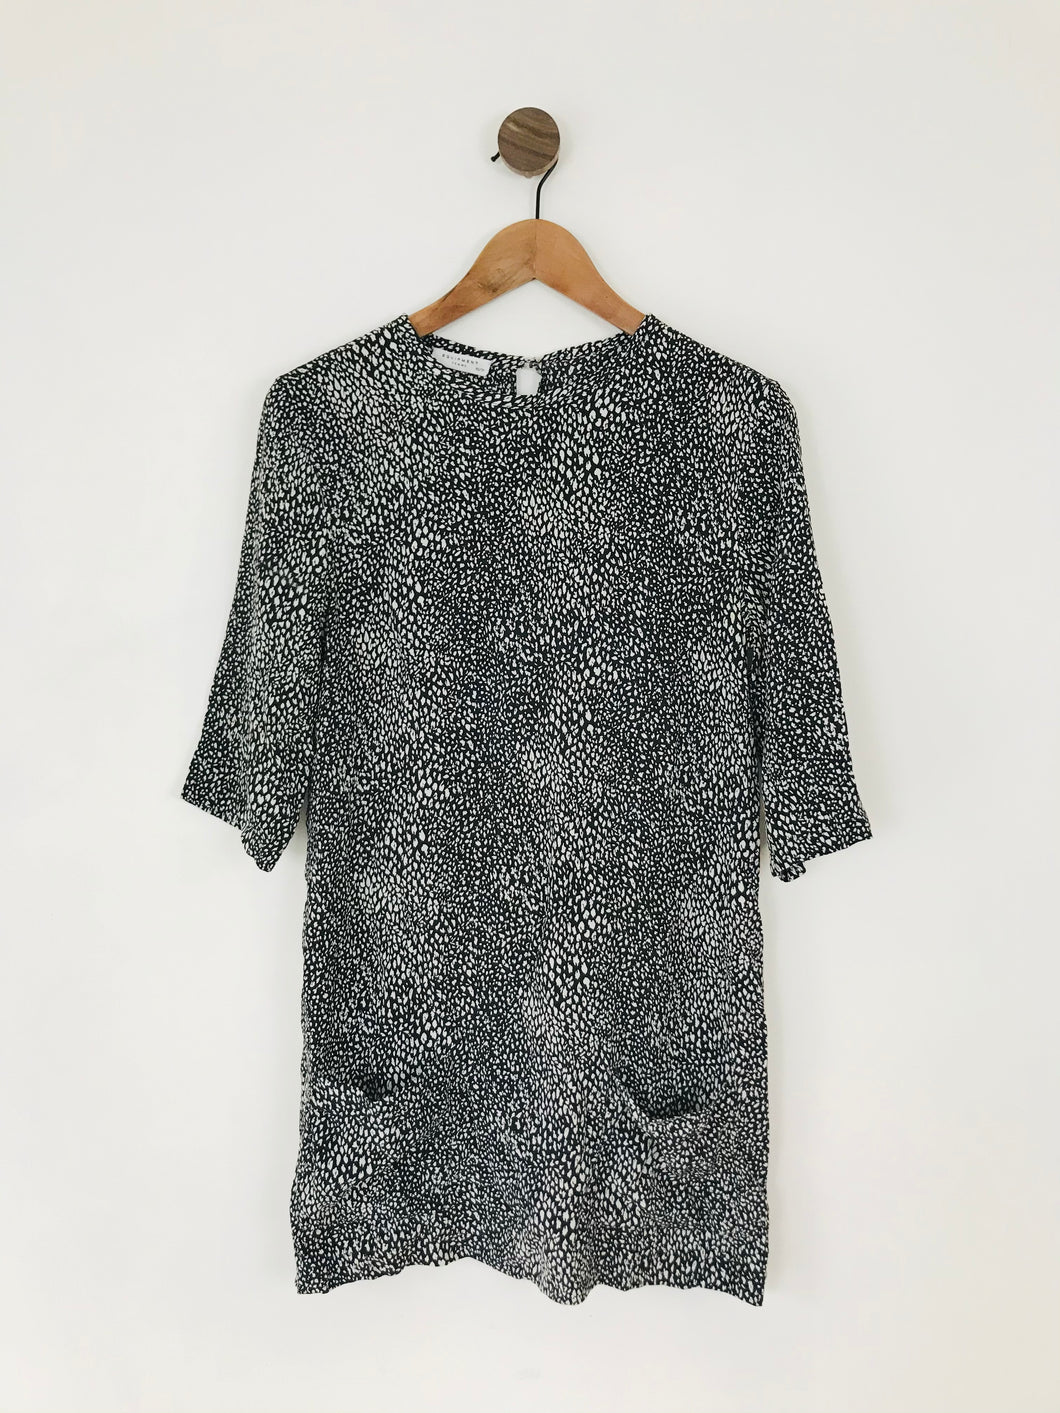 Equipment Femme Women’s 100% Silk Short Sleeve Mini Dress | XS UK6 | Black